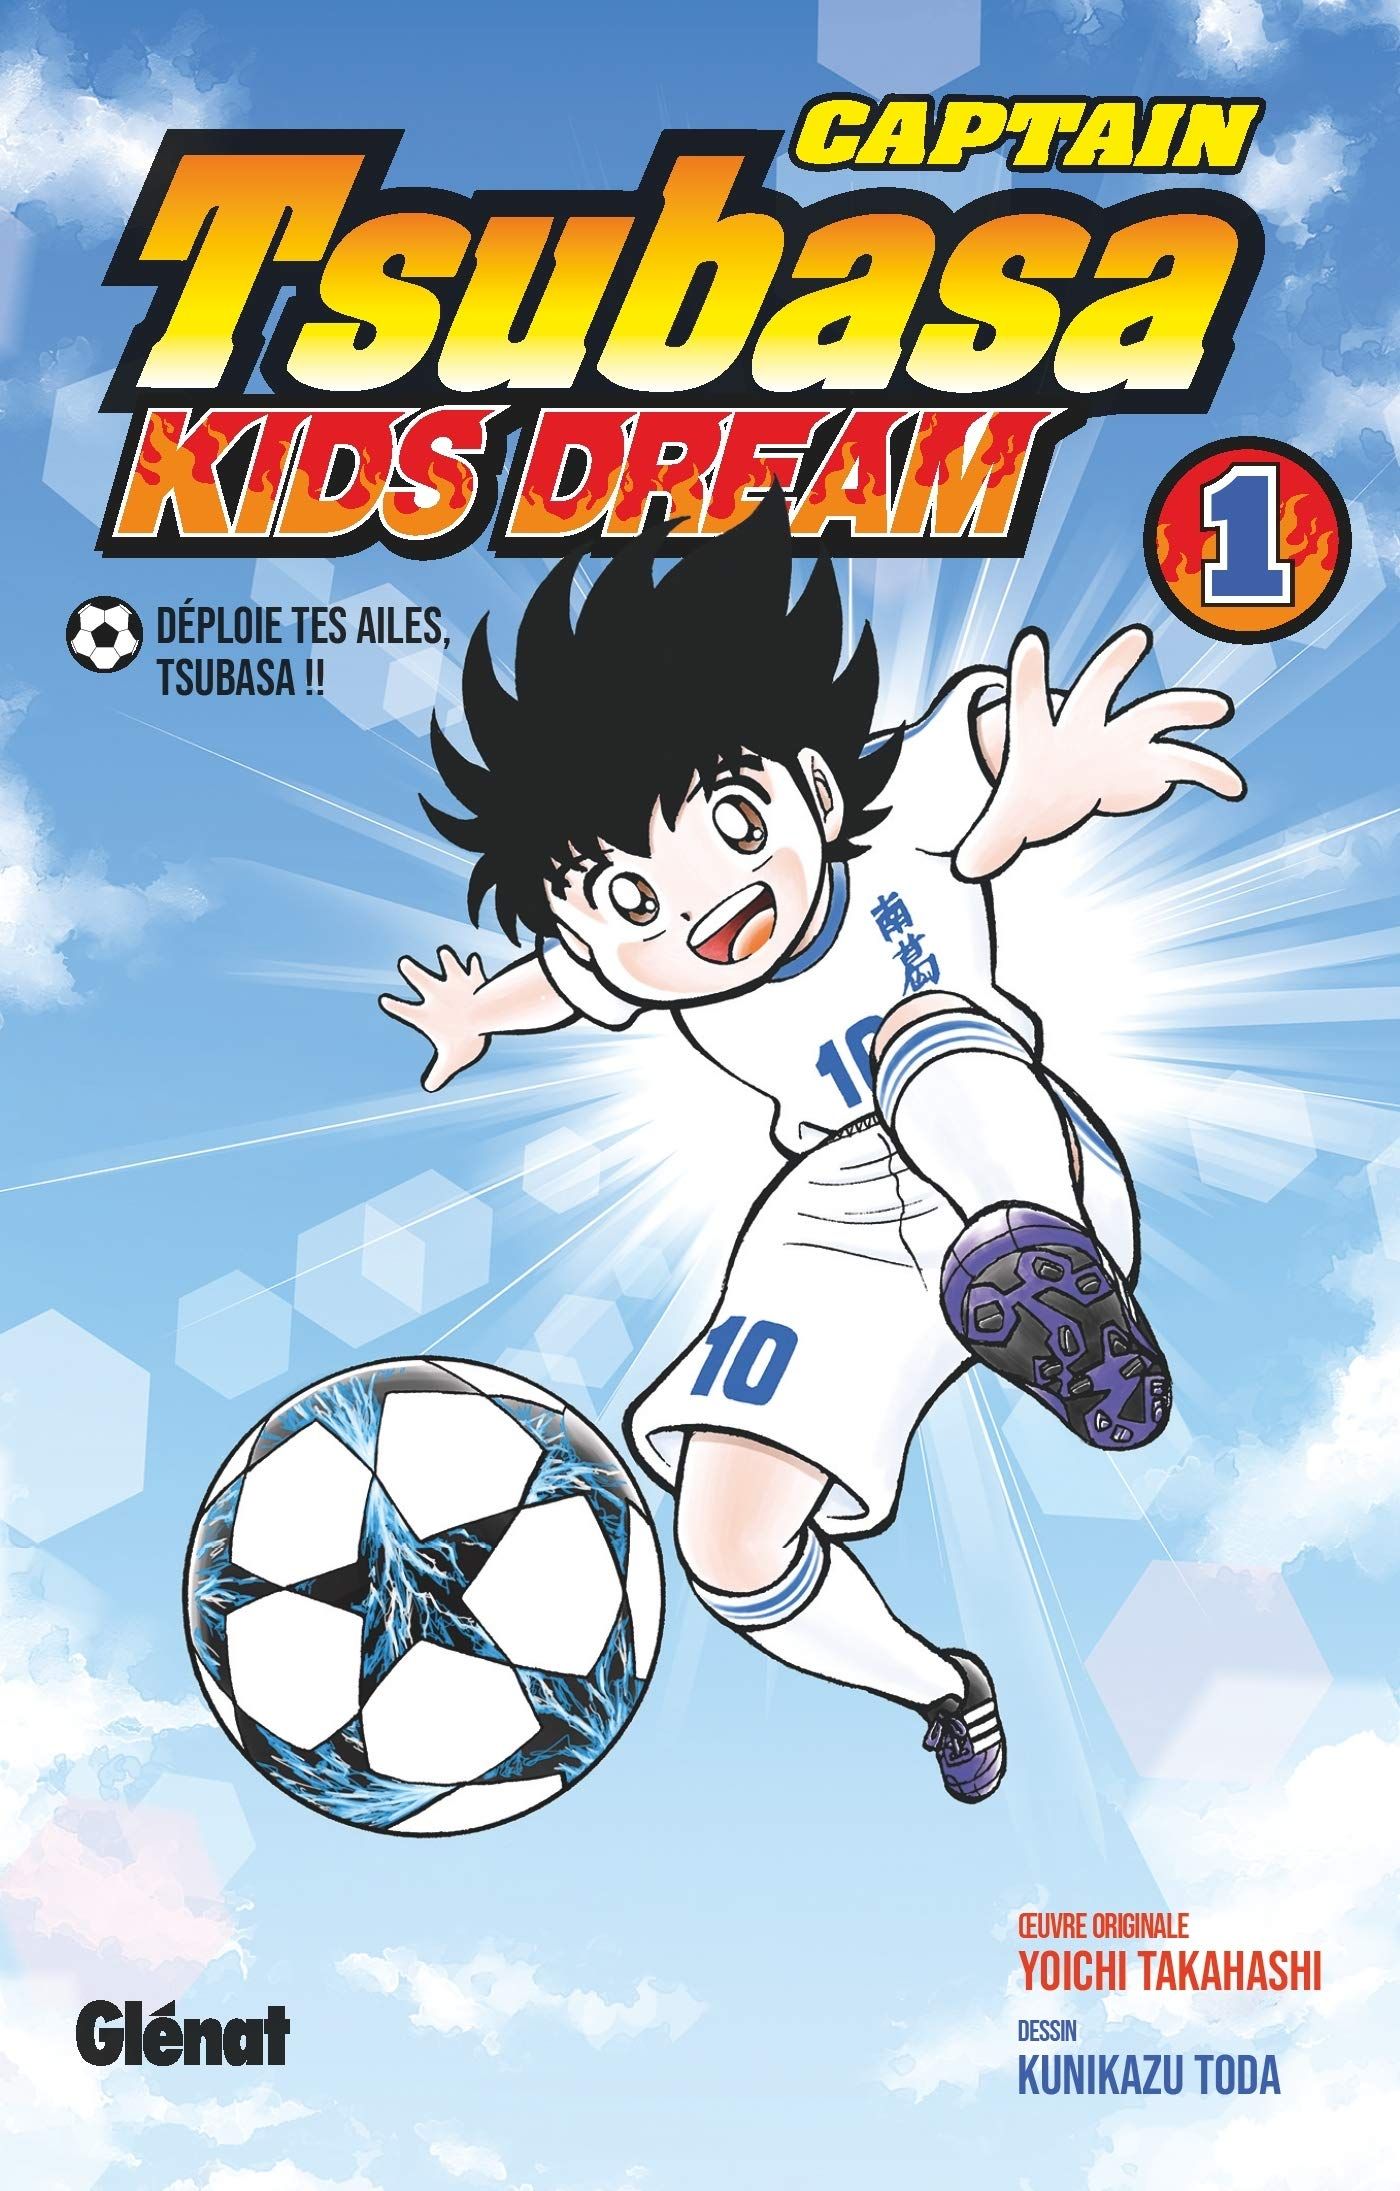 Captain Tsubasa - Kids Dream